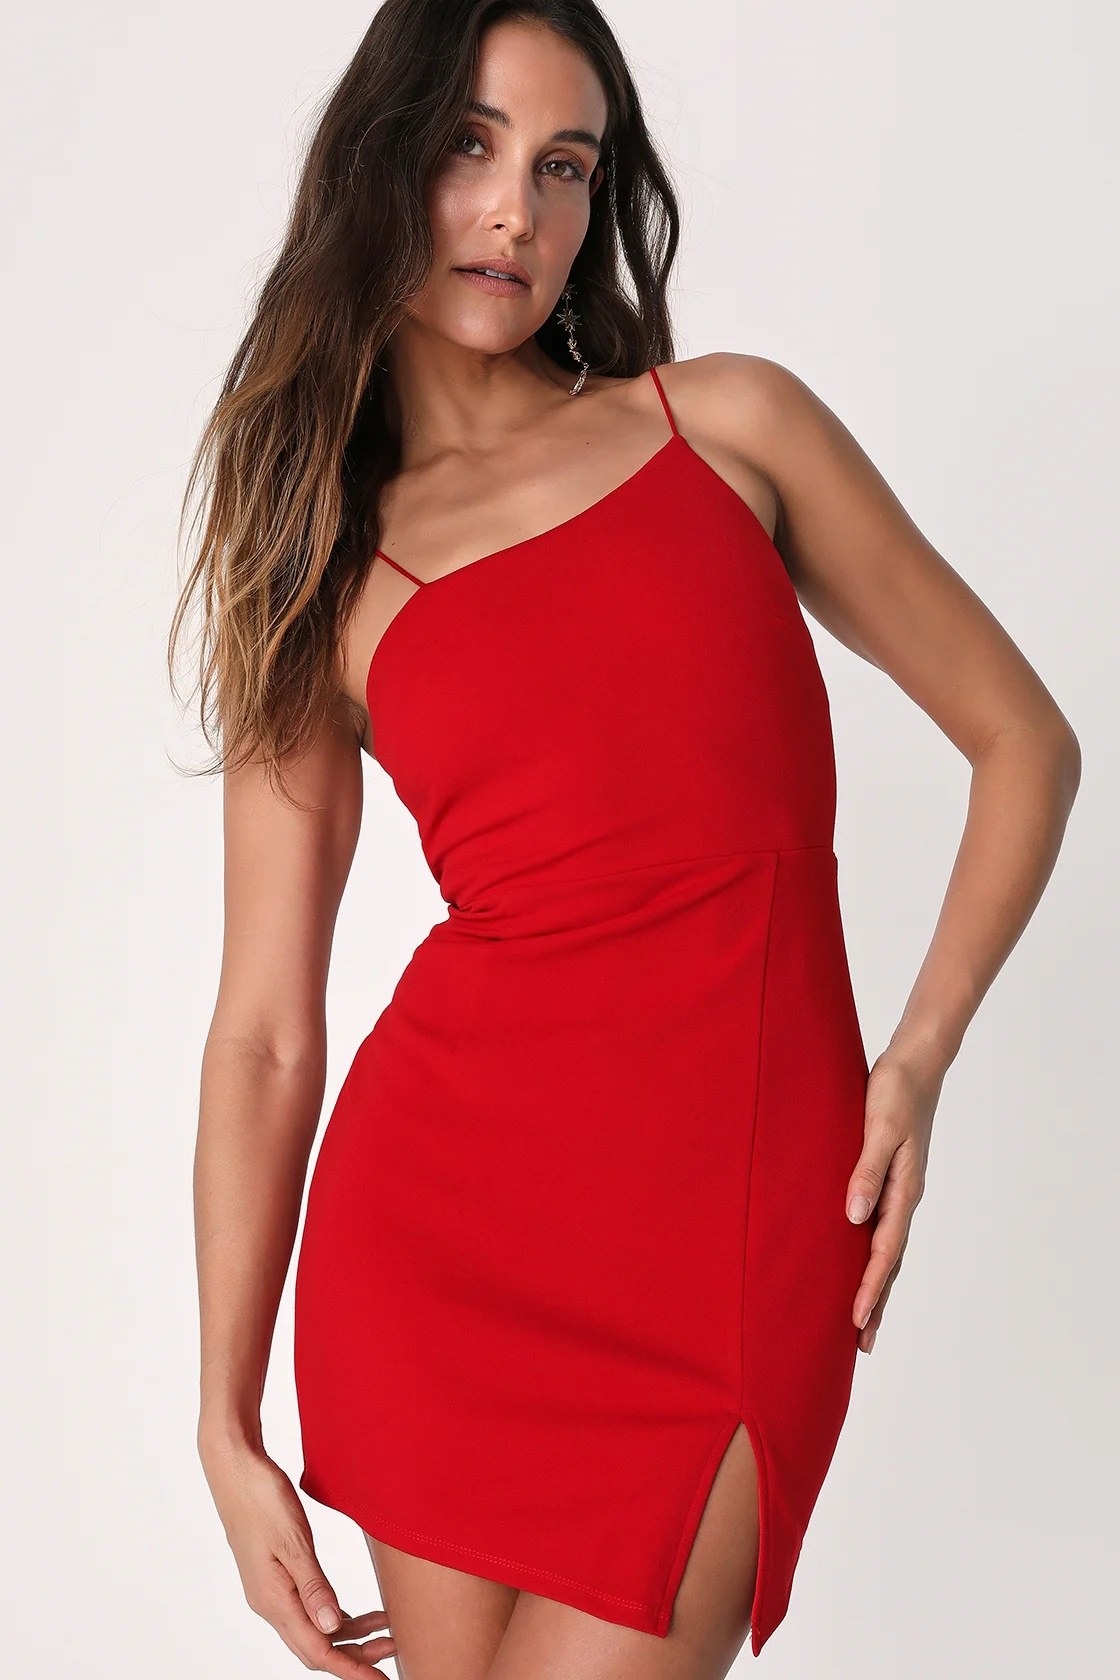 A model wearing a red dress